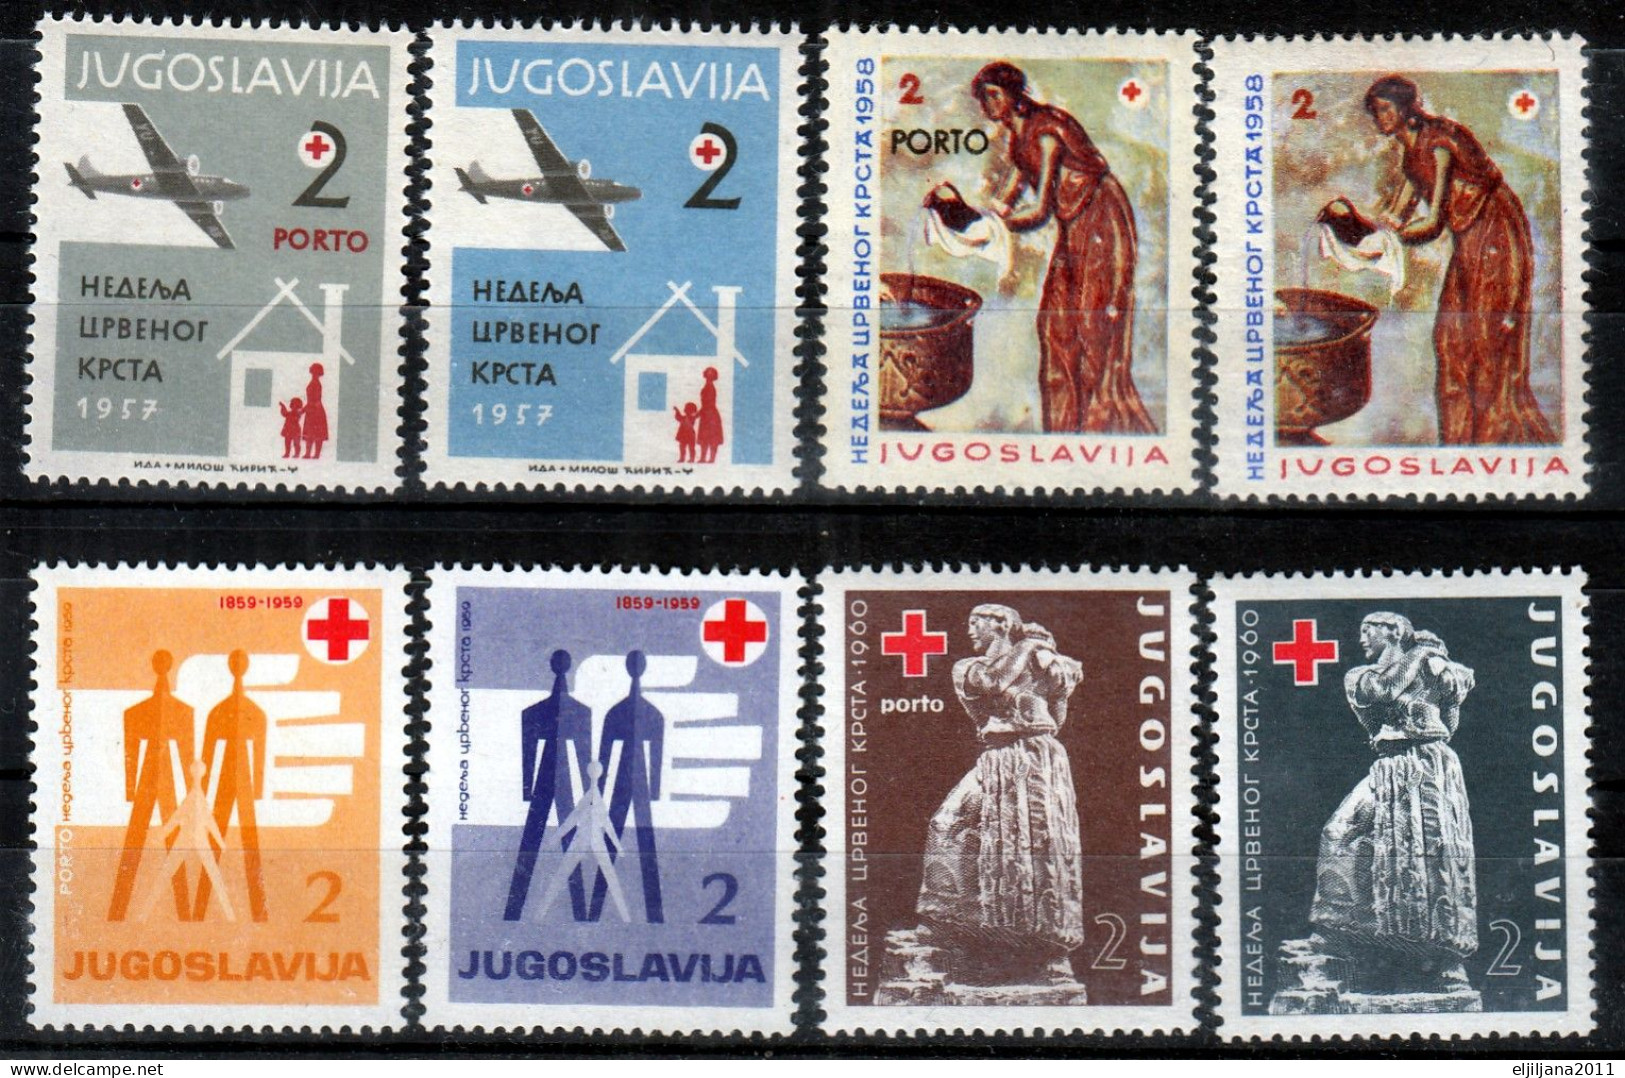 Action !! SALE !! 50 % OFF !! ⁕ Yugoslavia 1957 - 1960 ⁕ Postage Due & Red Cross ⁕ 8v MNH - Bienfaisance